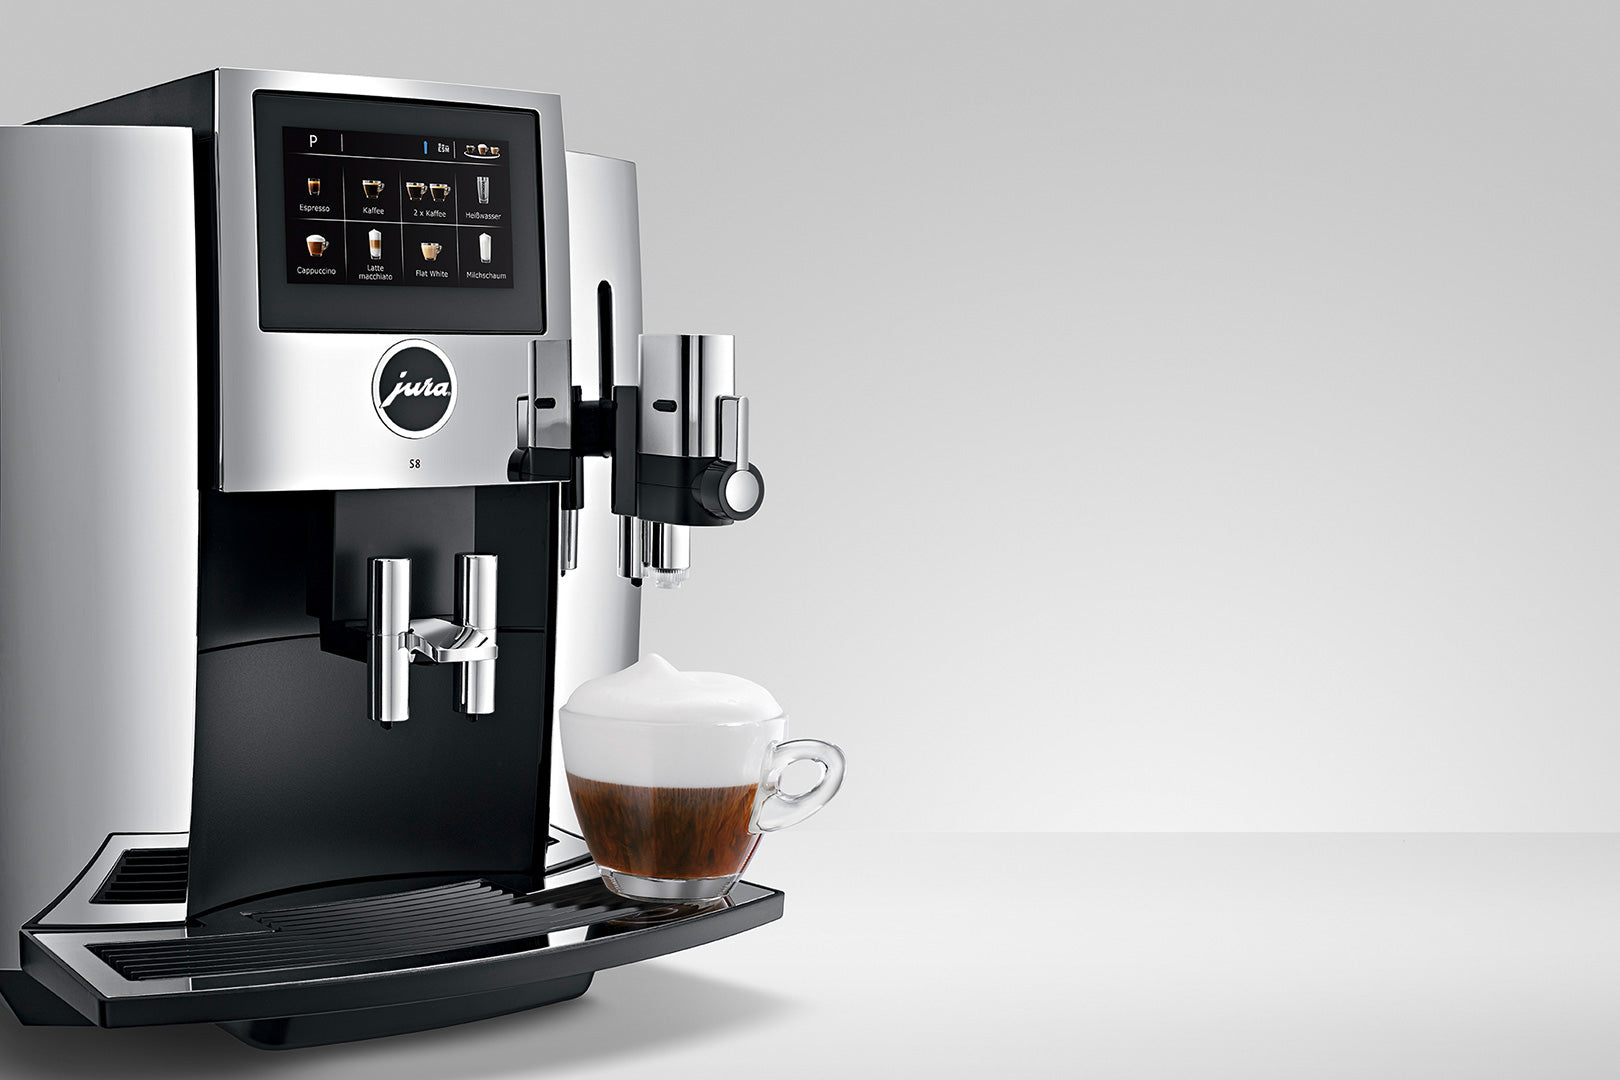 Jura S8 Bean-to-Cup Coffee Machine